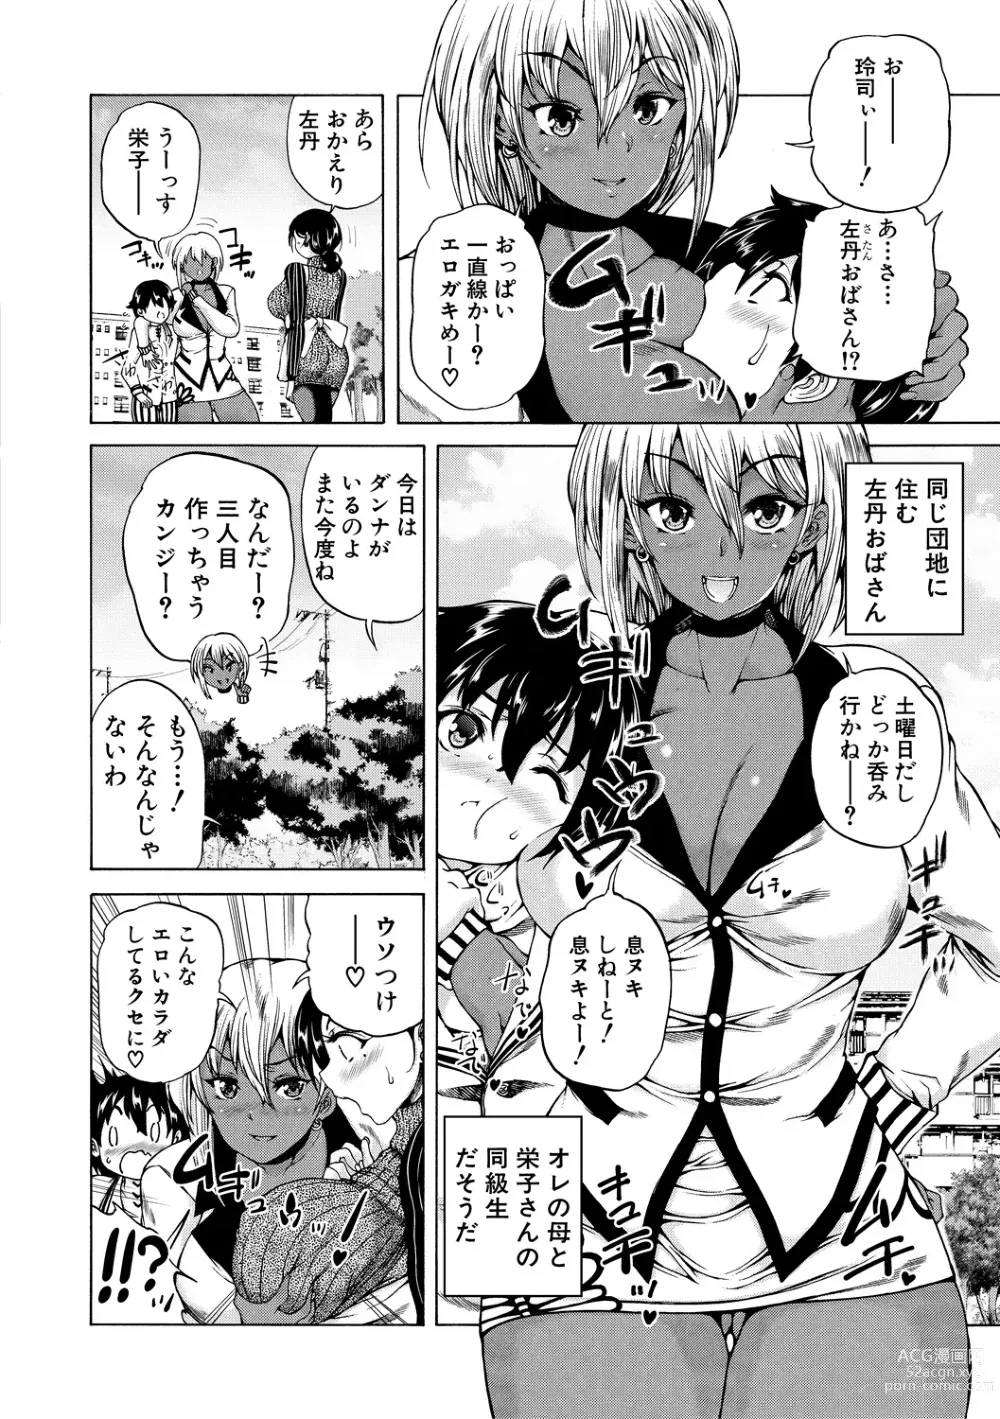 Page 8 of manga Maou Tensei Harem - Devil Reincarnation